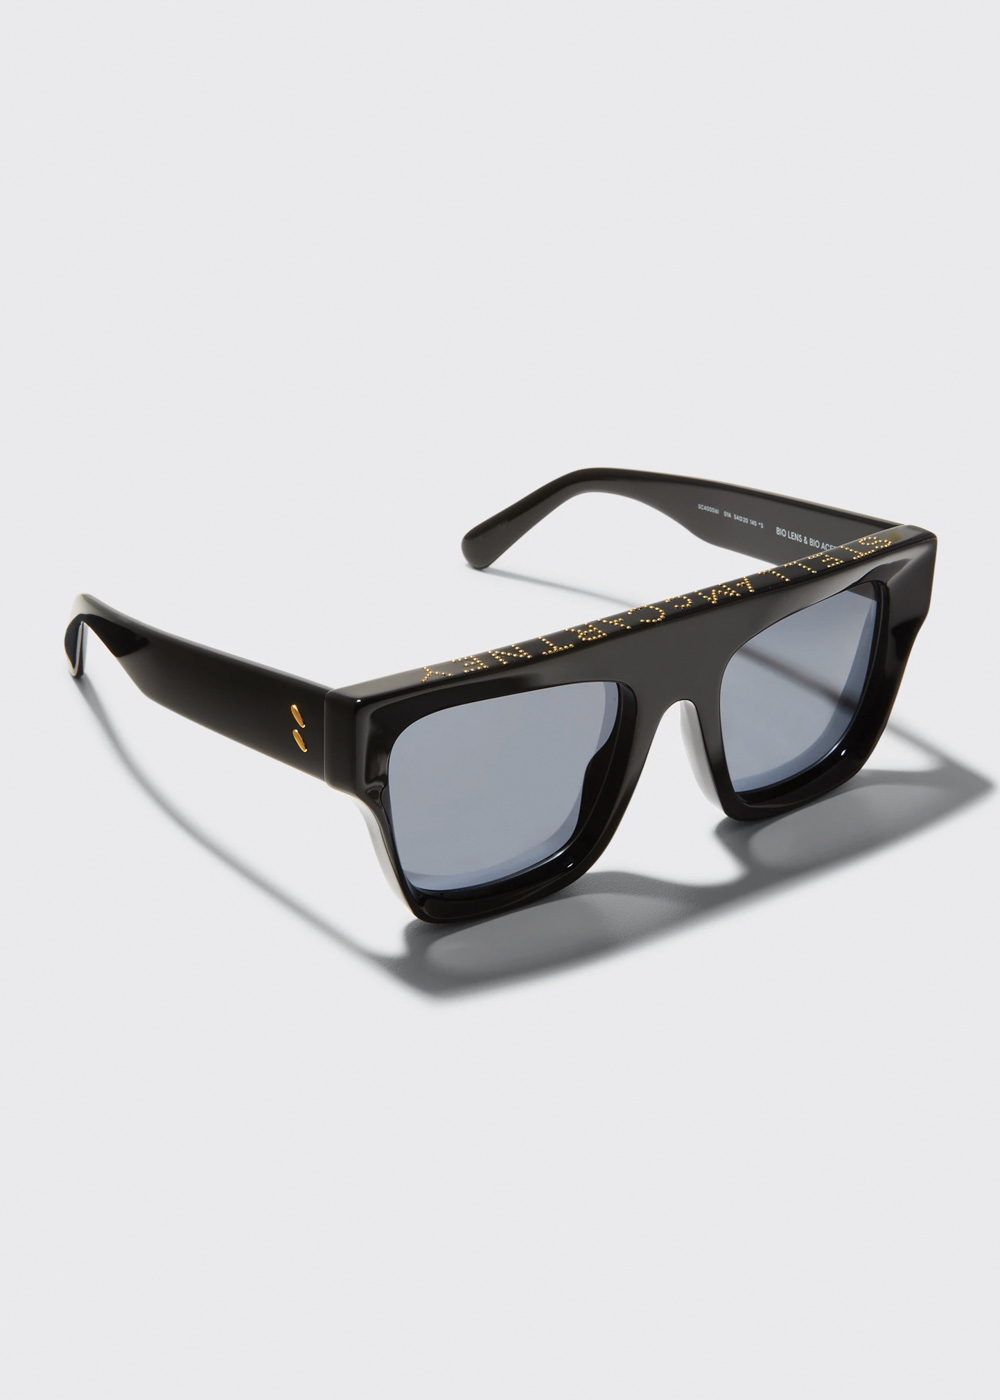 36 Stella Mccartney Women's Square Bio Acetate & Metal Sunglasses $320 Shopmarcus.com